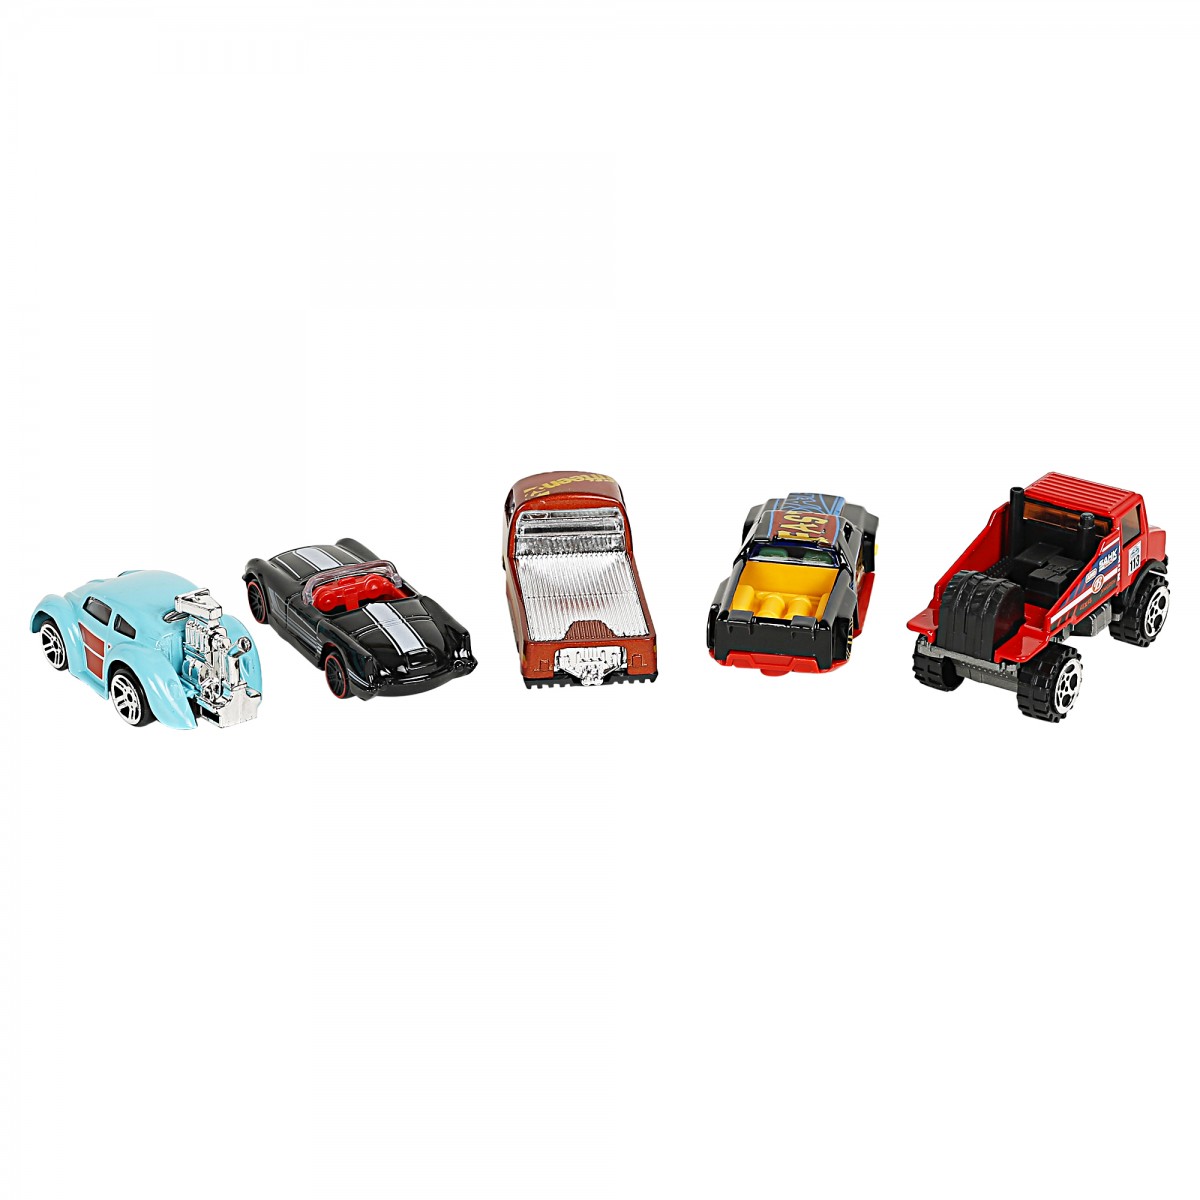 Ralleys Firefleet Street Machines Die Cast Car for Kids, Pack of 5, Multicolour